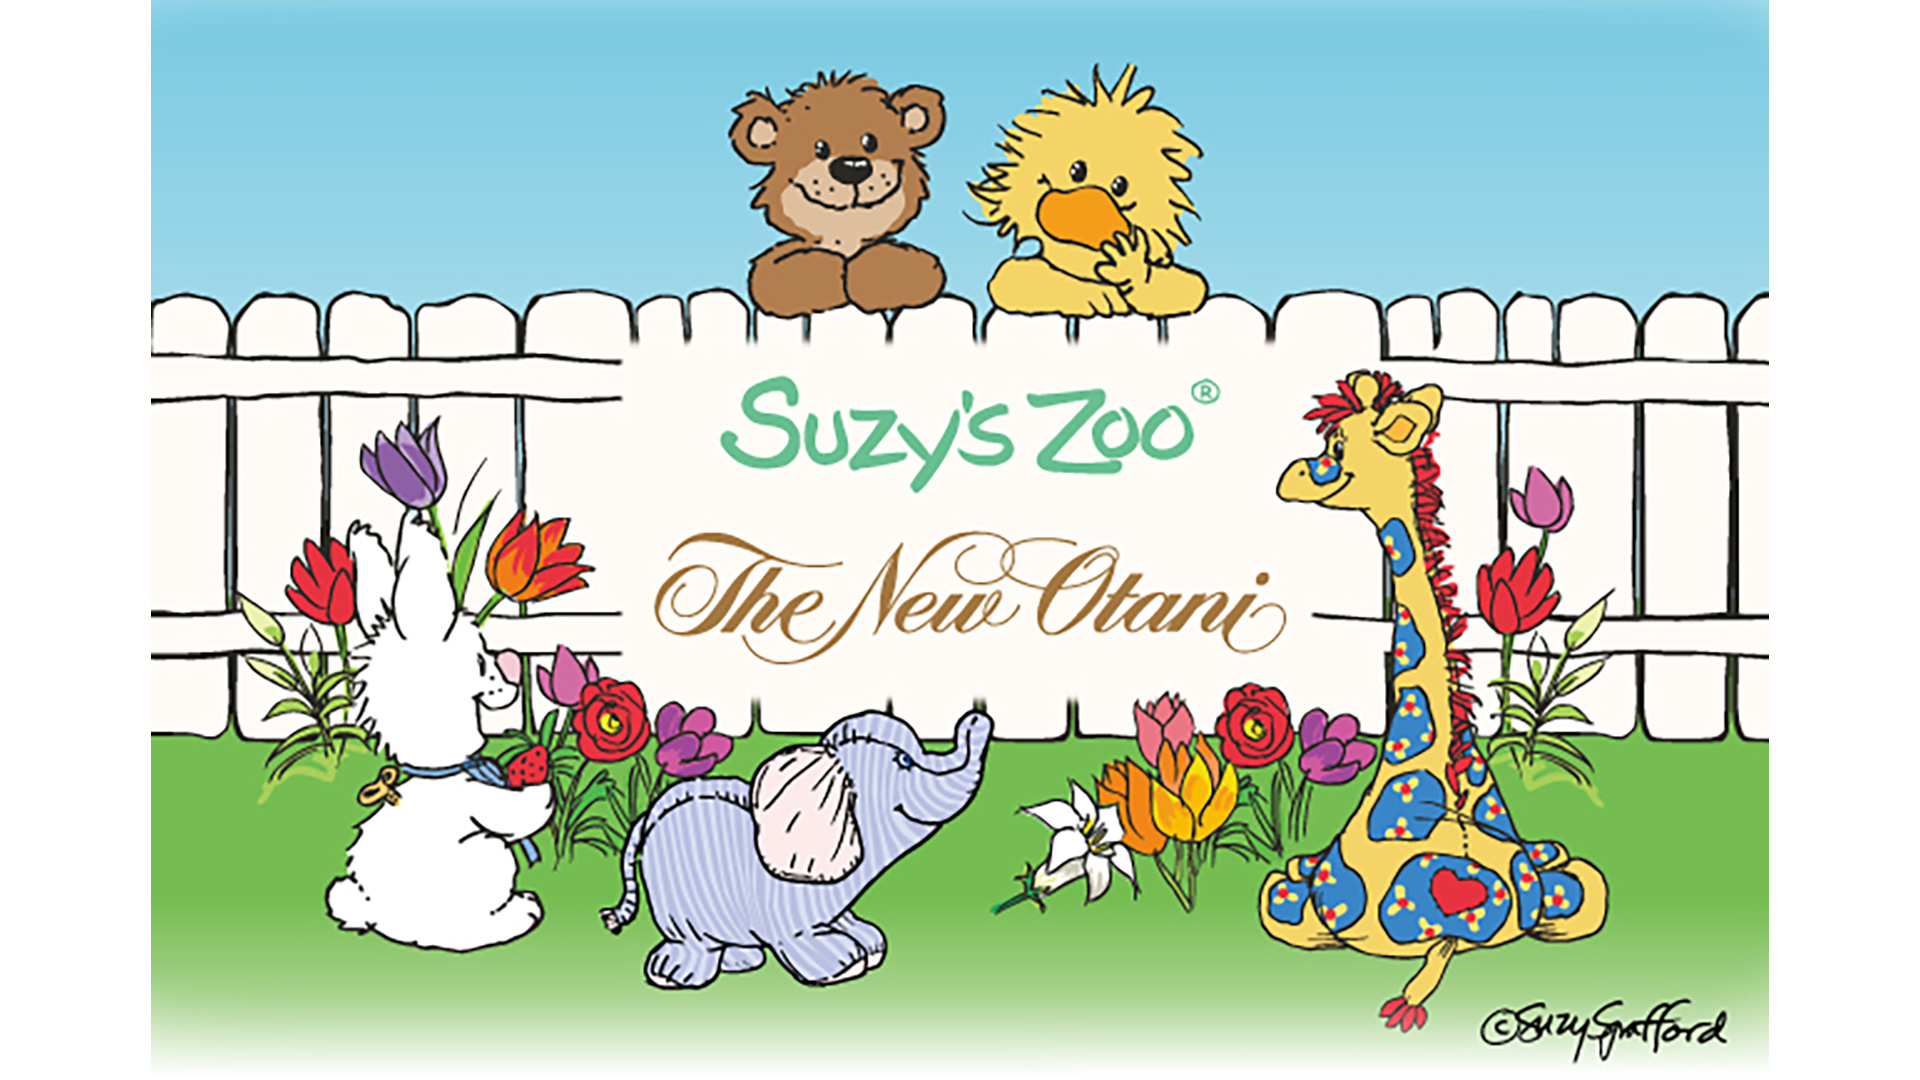 Suzy's Zoo コラボレーションルーム【インターネット予約限定